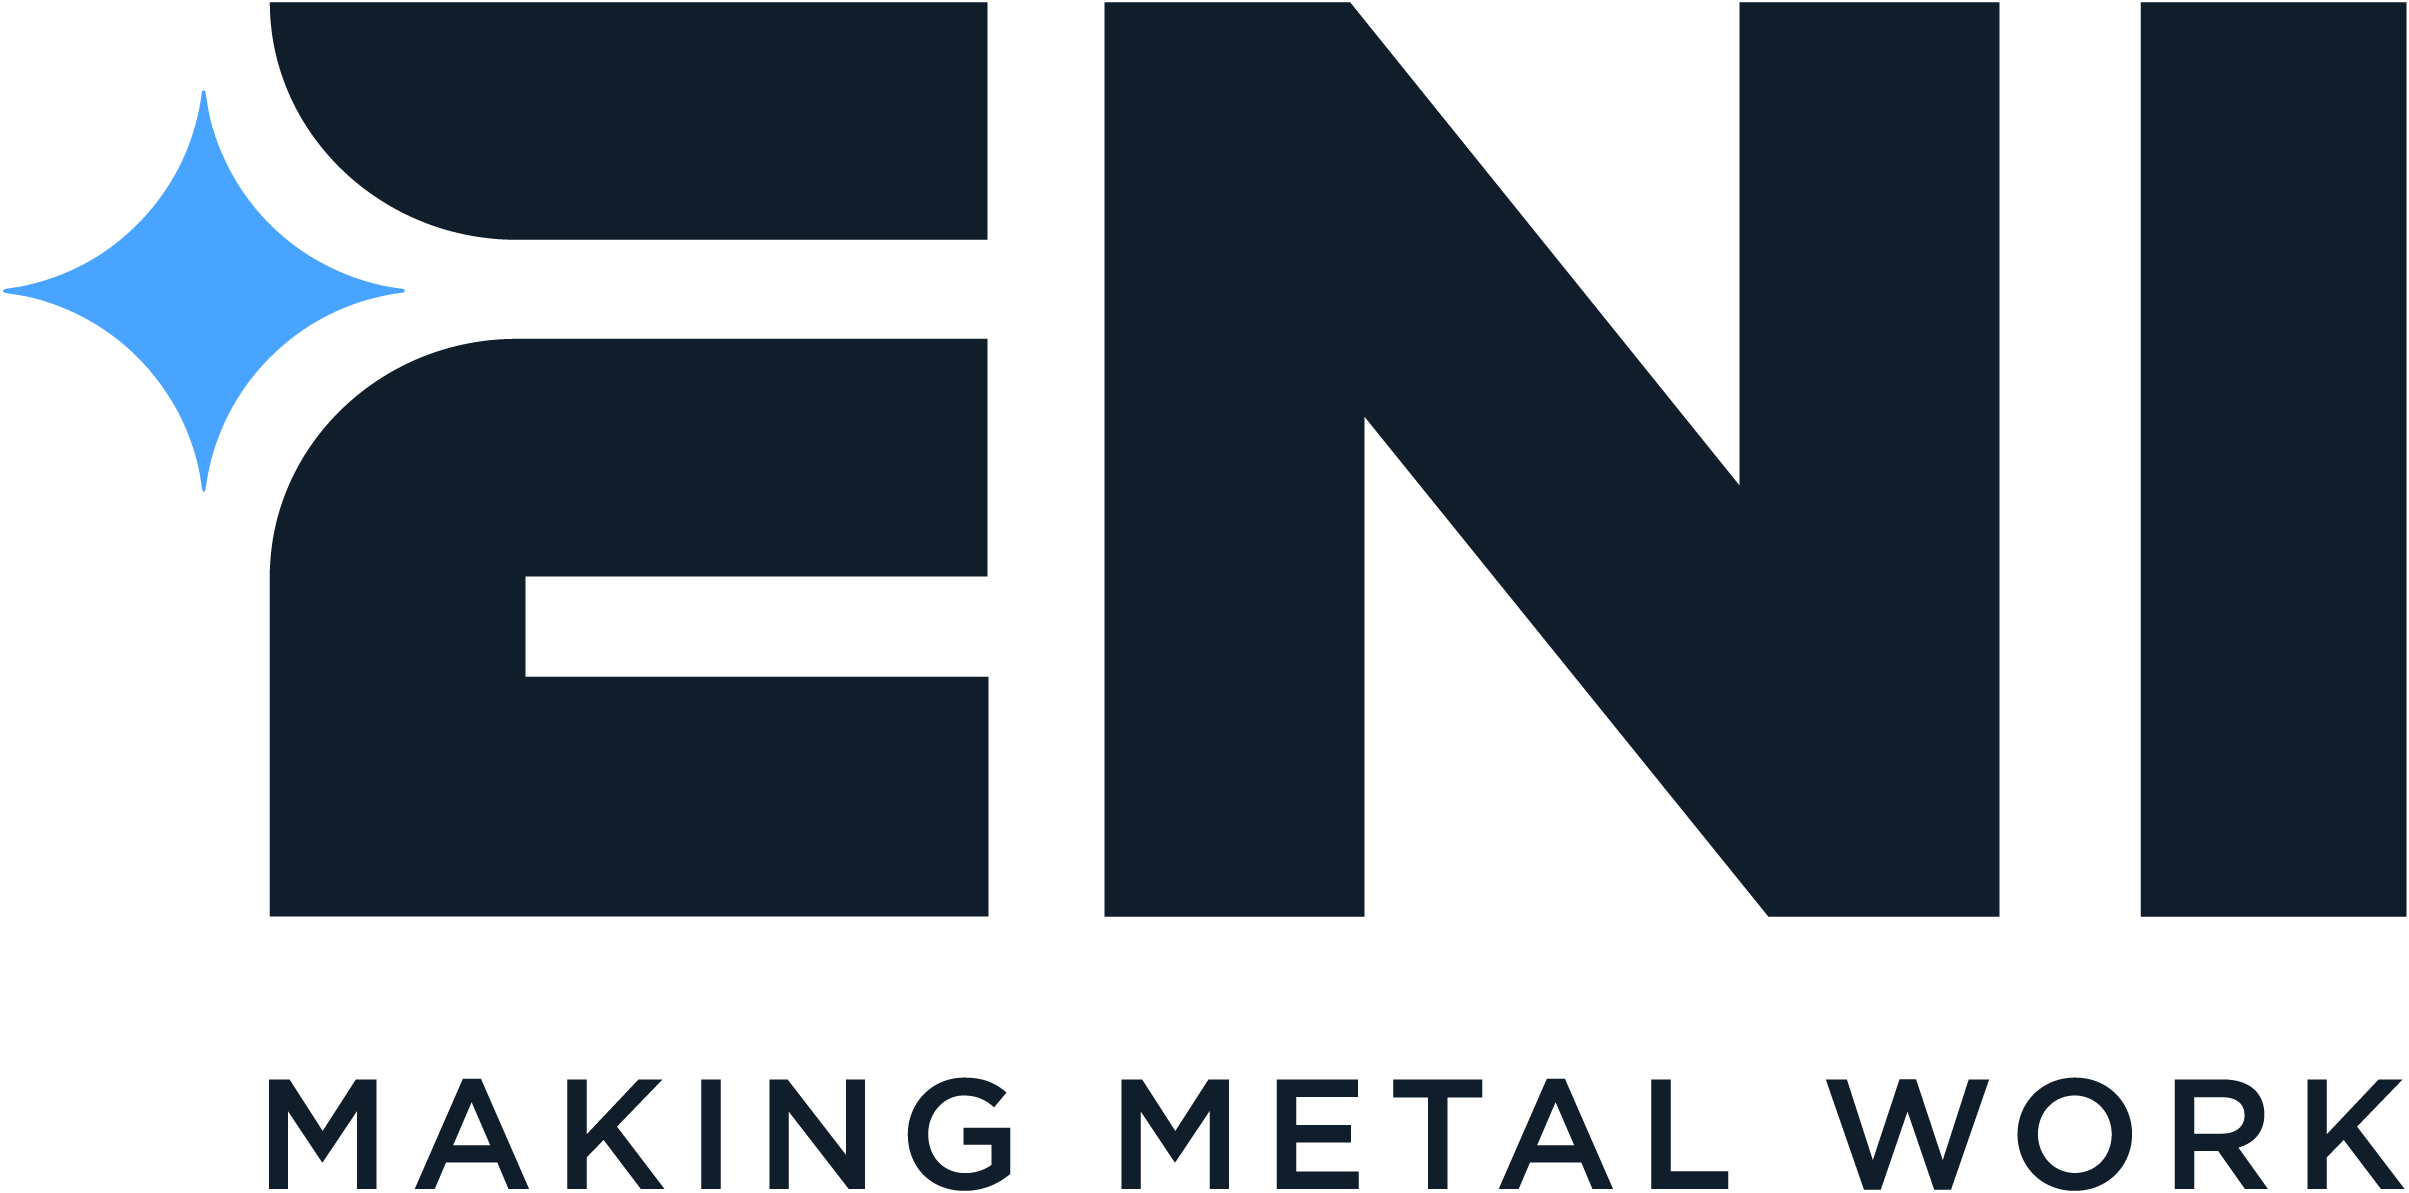 ENI Engineering Limited